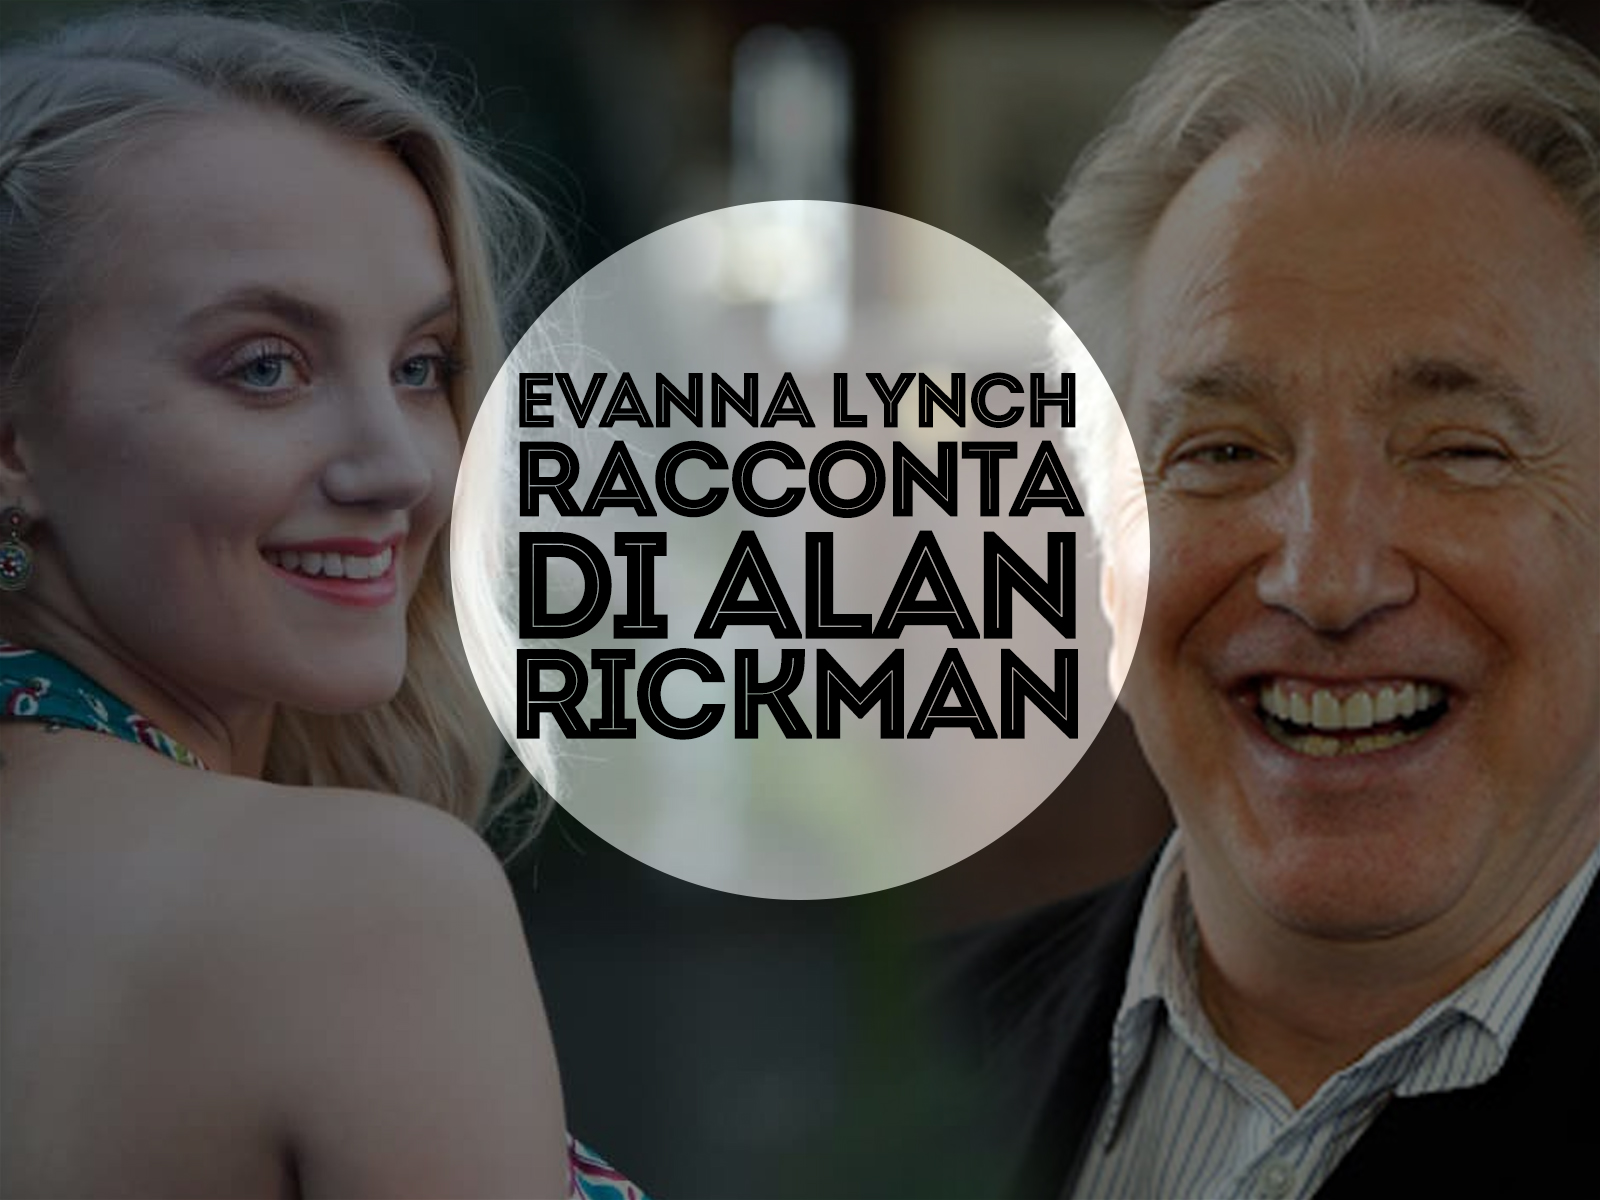 Evanna Lynch racconta di Alan Rickman